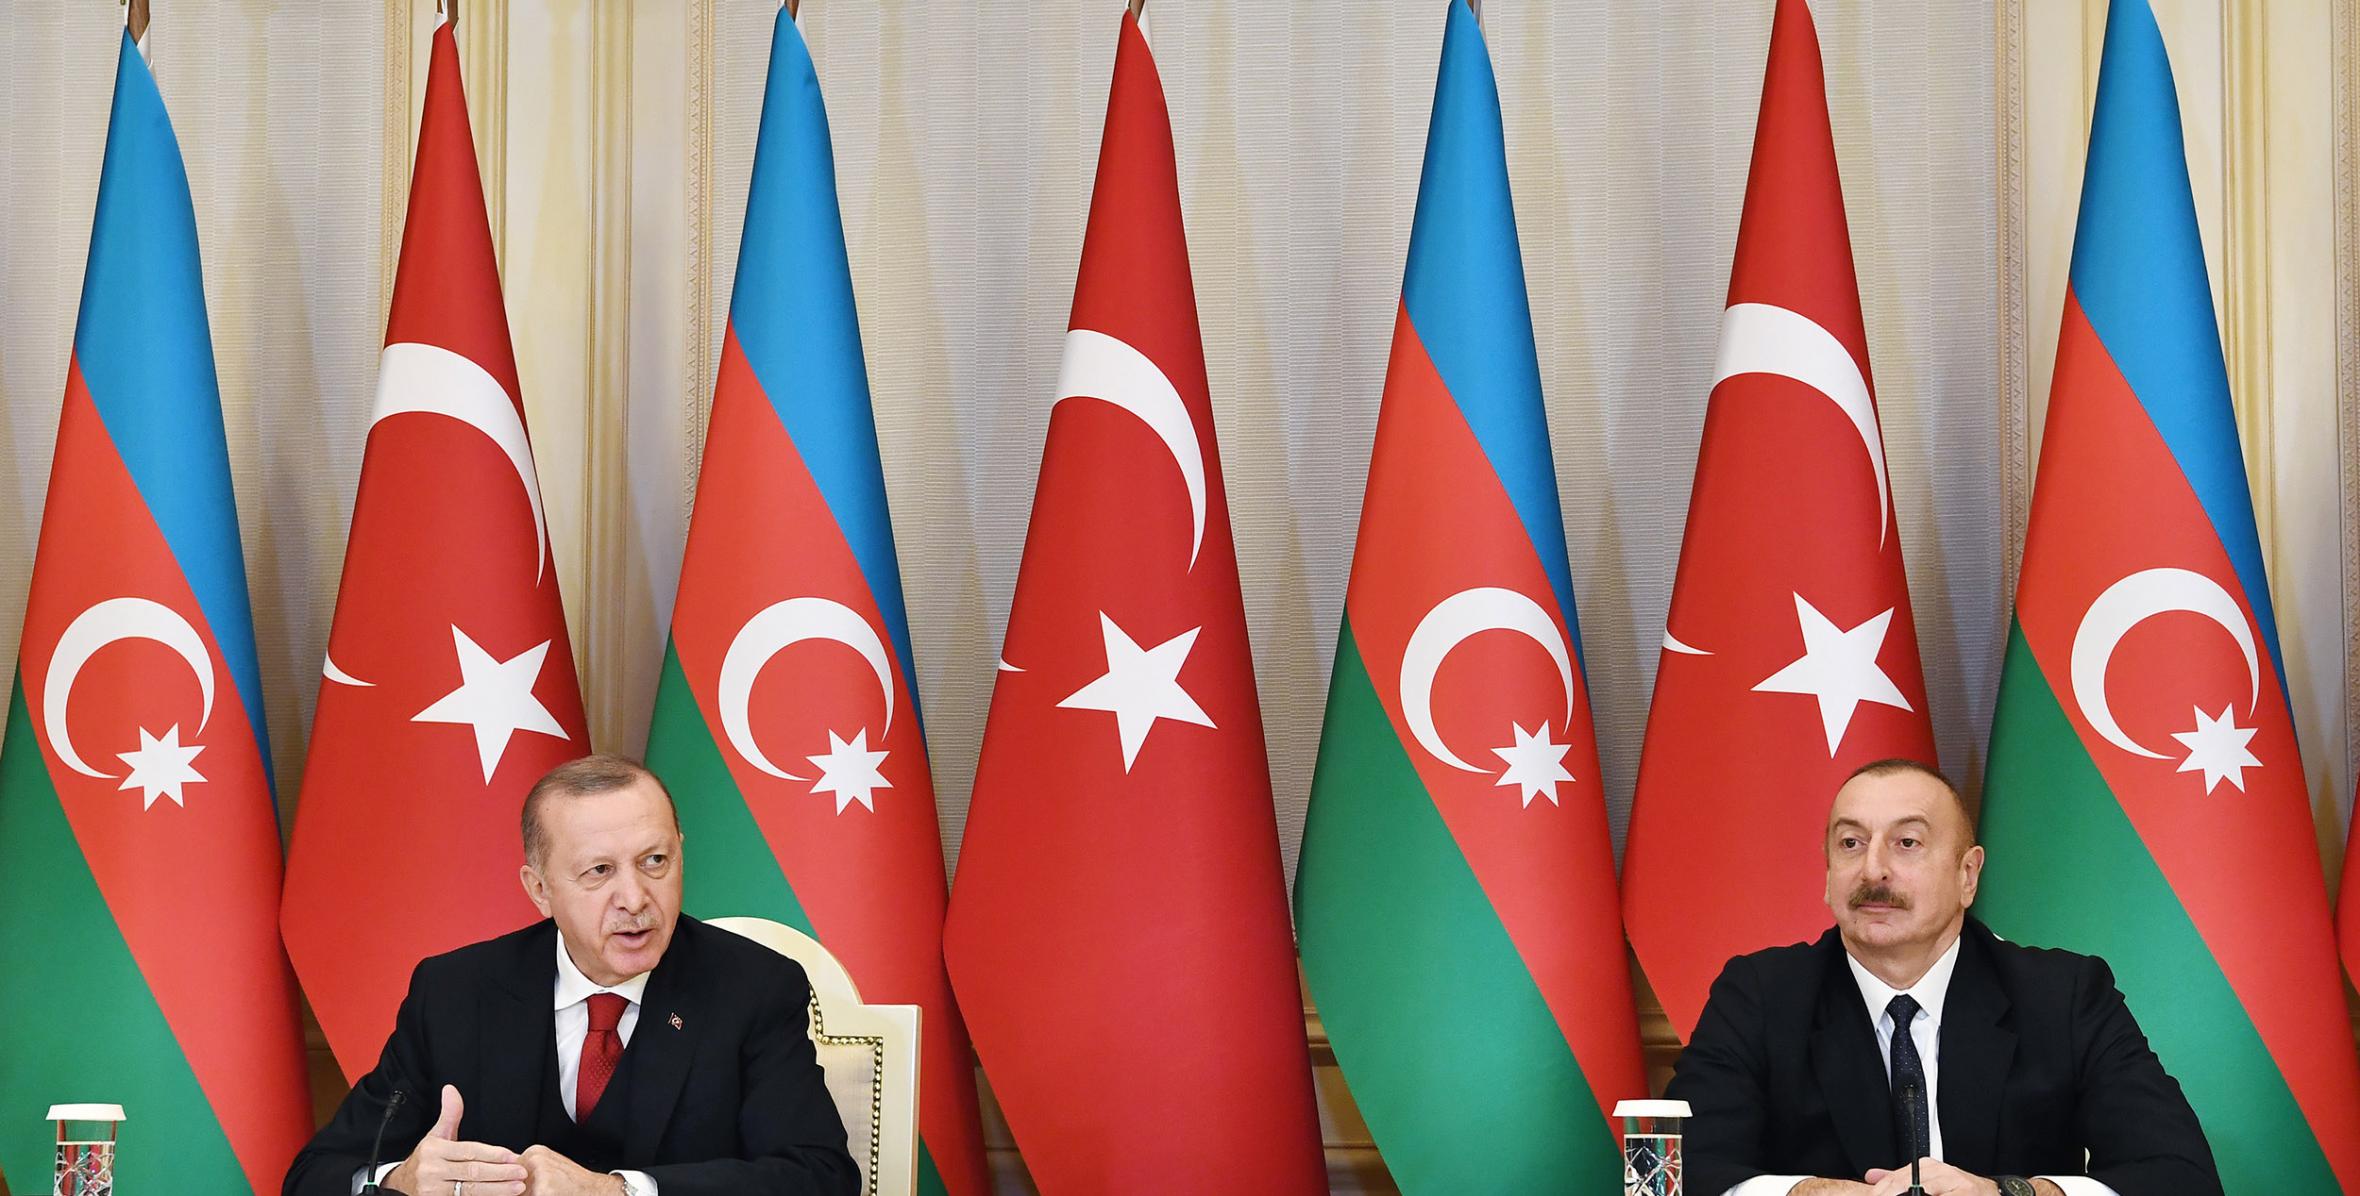 Presidents of Azerbaijan and Turkey made press statements